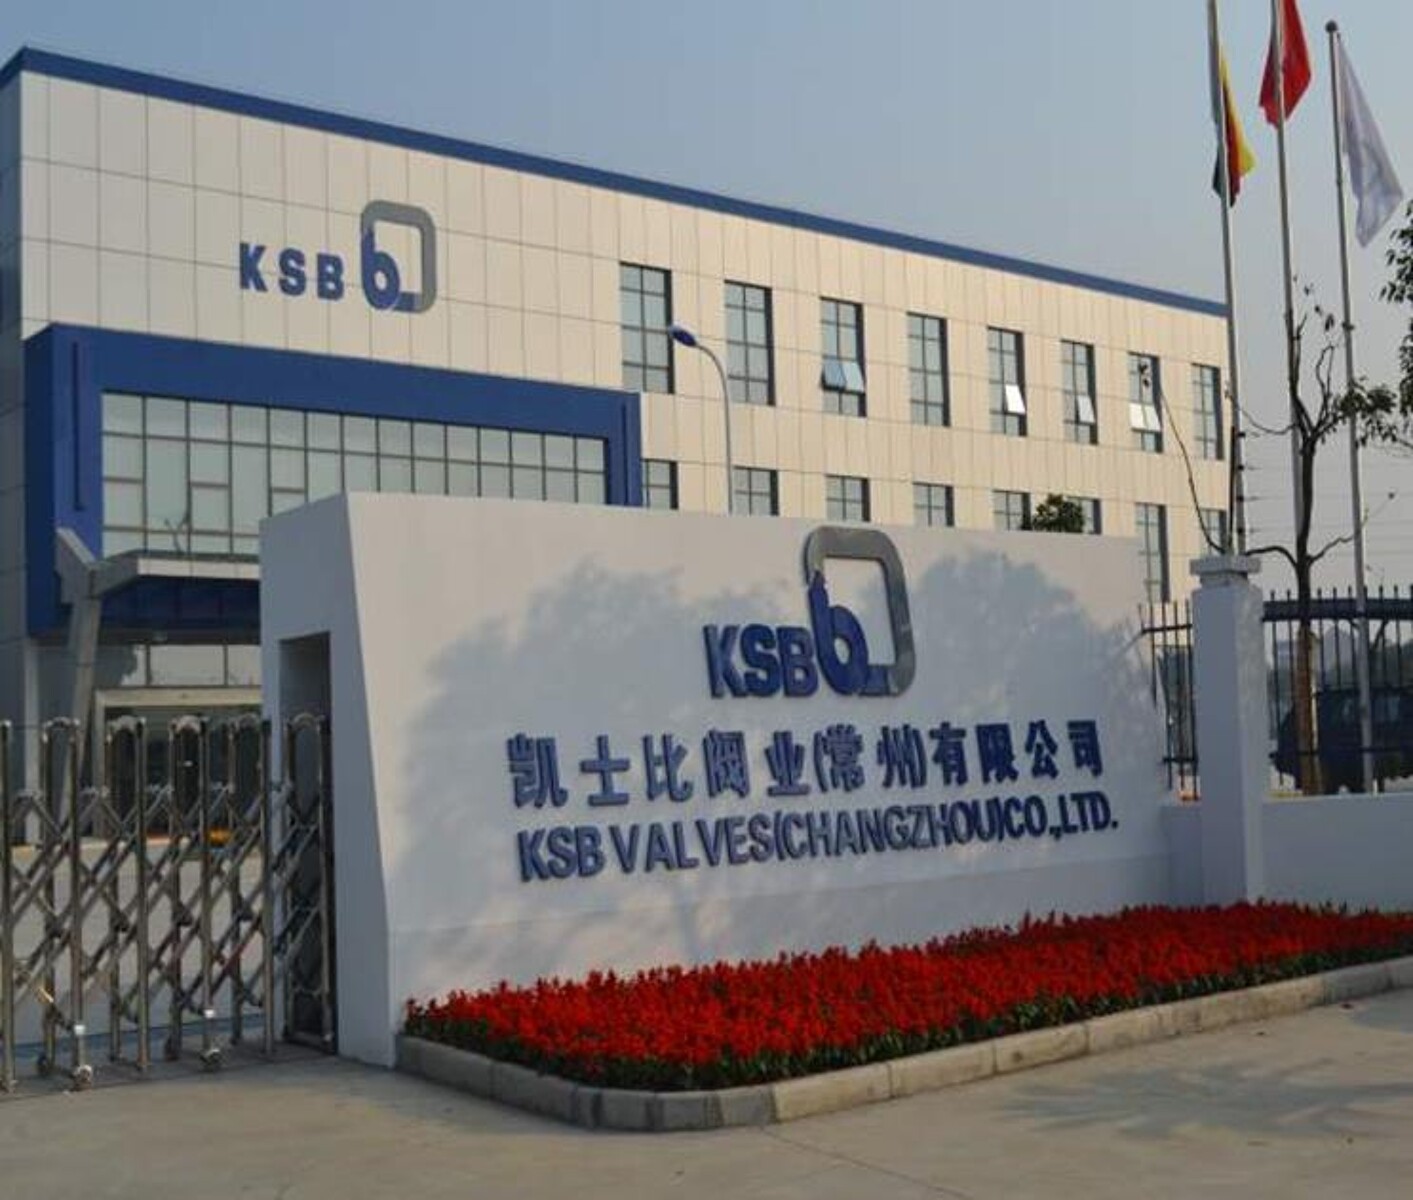 KSB Valves (Changzhou) Co., Ltd building